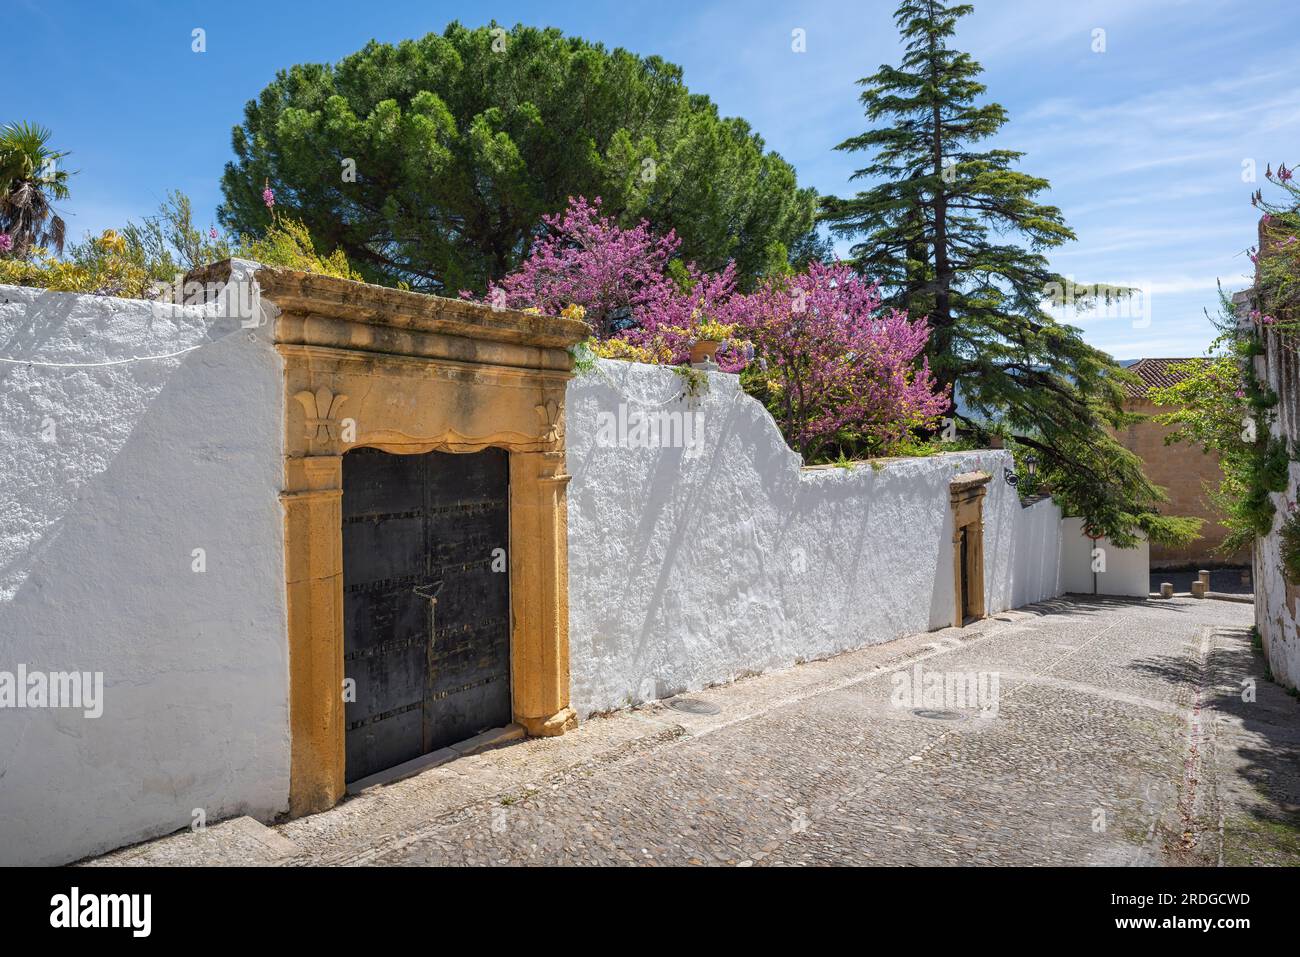 Casa del Rey Moro Entrance (House of the Moorish King) - Ronda, Andalusia, Spain Stock Photo